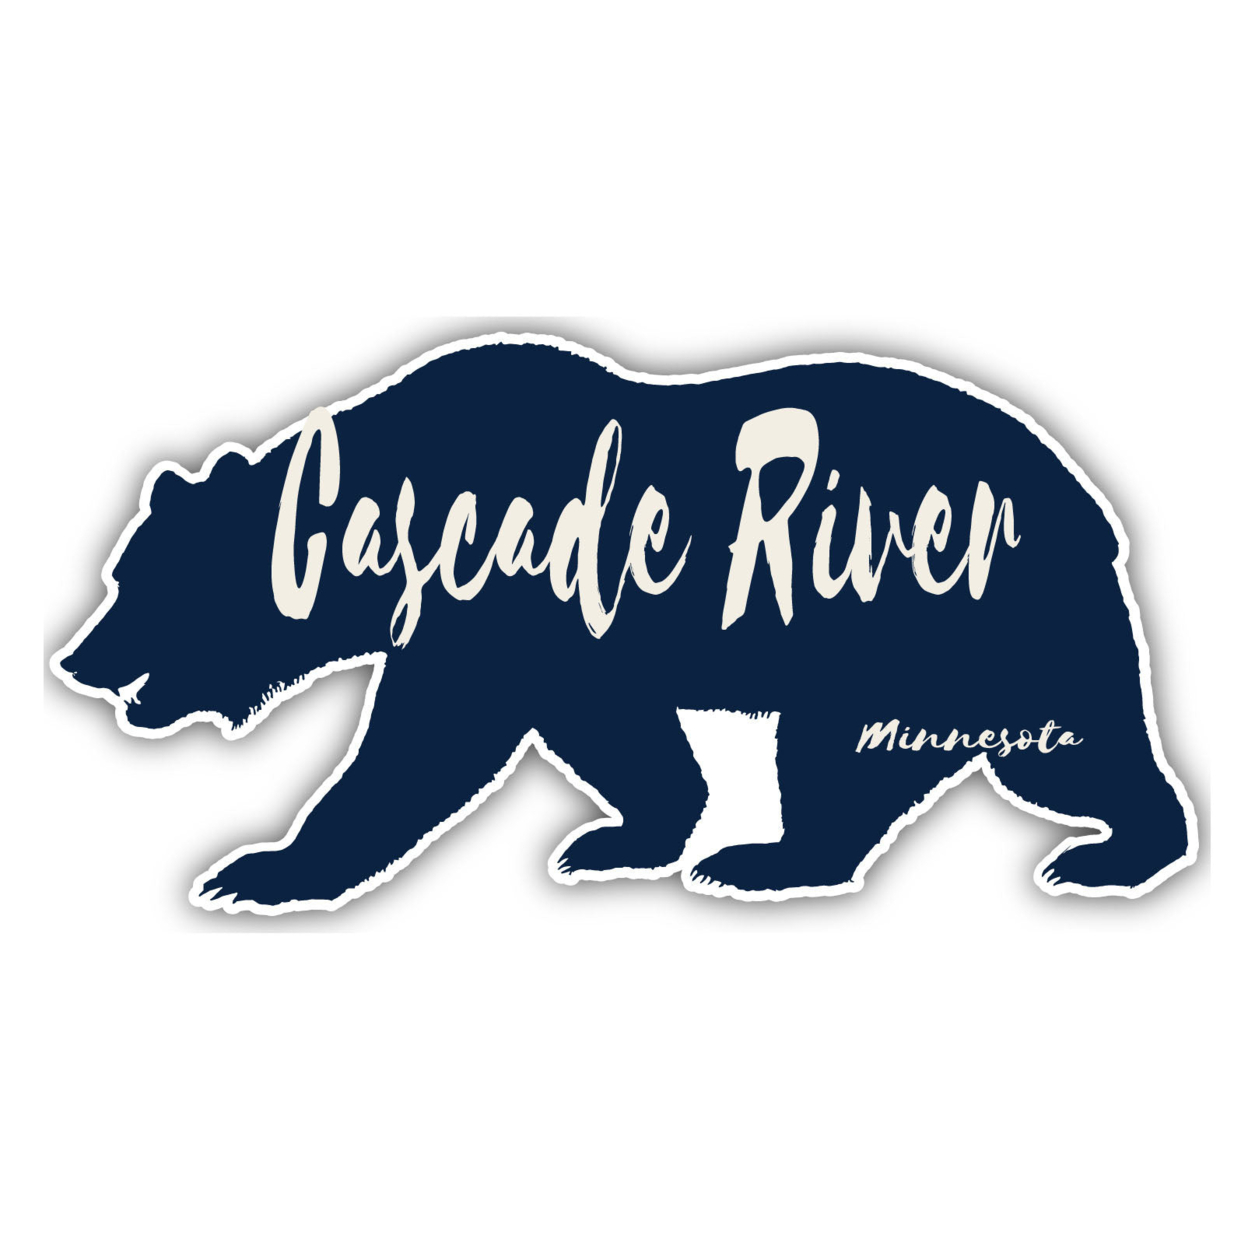 Cascade River Minnesota Souvenir Decorative Stickers (Choose Theme And Size) - 4-Pack, 10-Inch, Bear